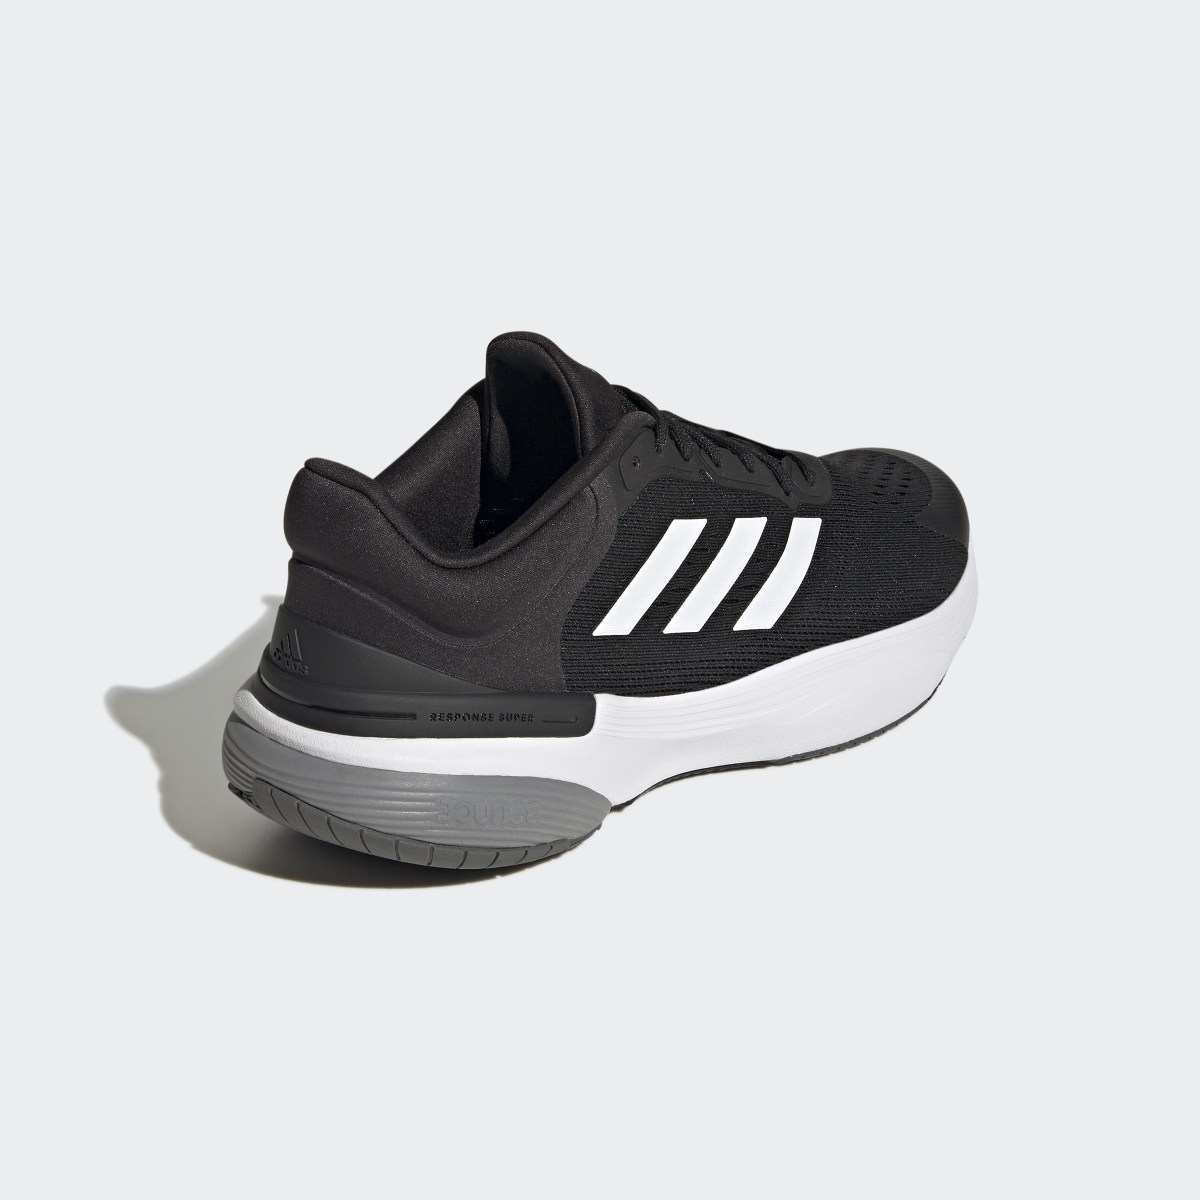 Adidas Response Super 3.0 Running Shoes. 6